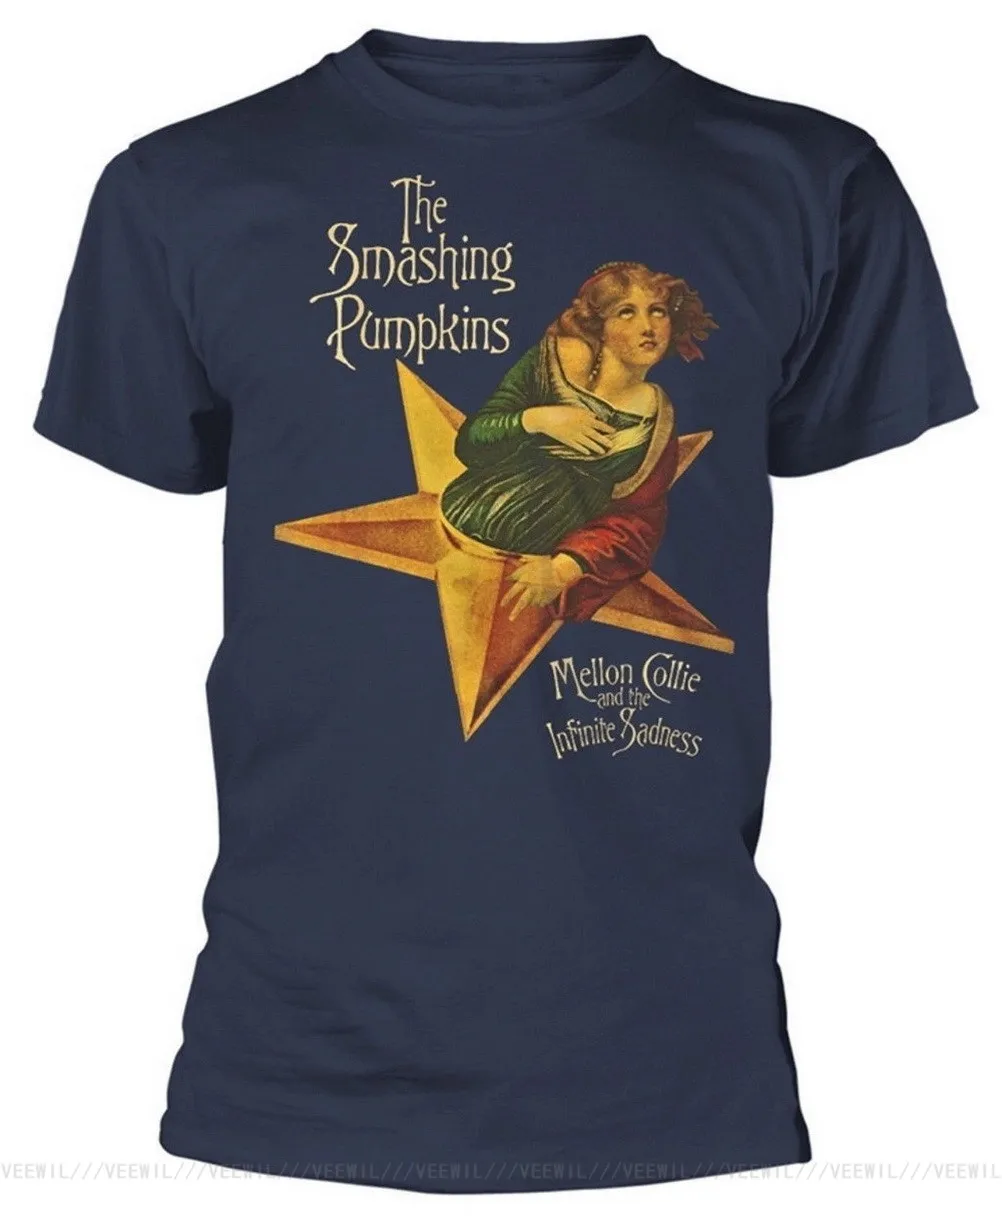 The Smashing Pumpkins 'Mellon Collie And The Infinite Sadness' T-Shirt Cotton Tee Shirt Trendy Streetwear